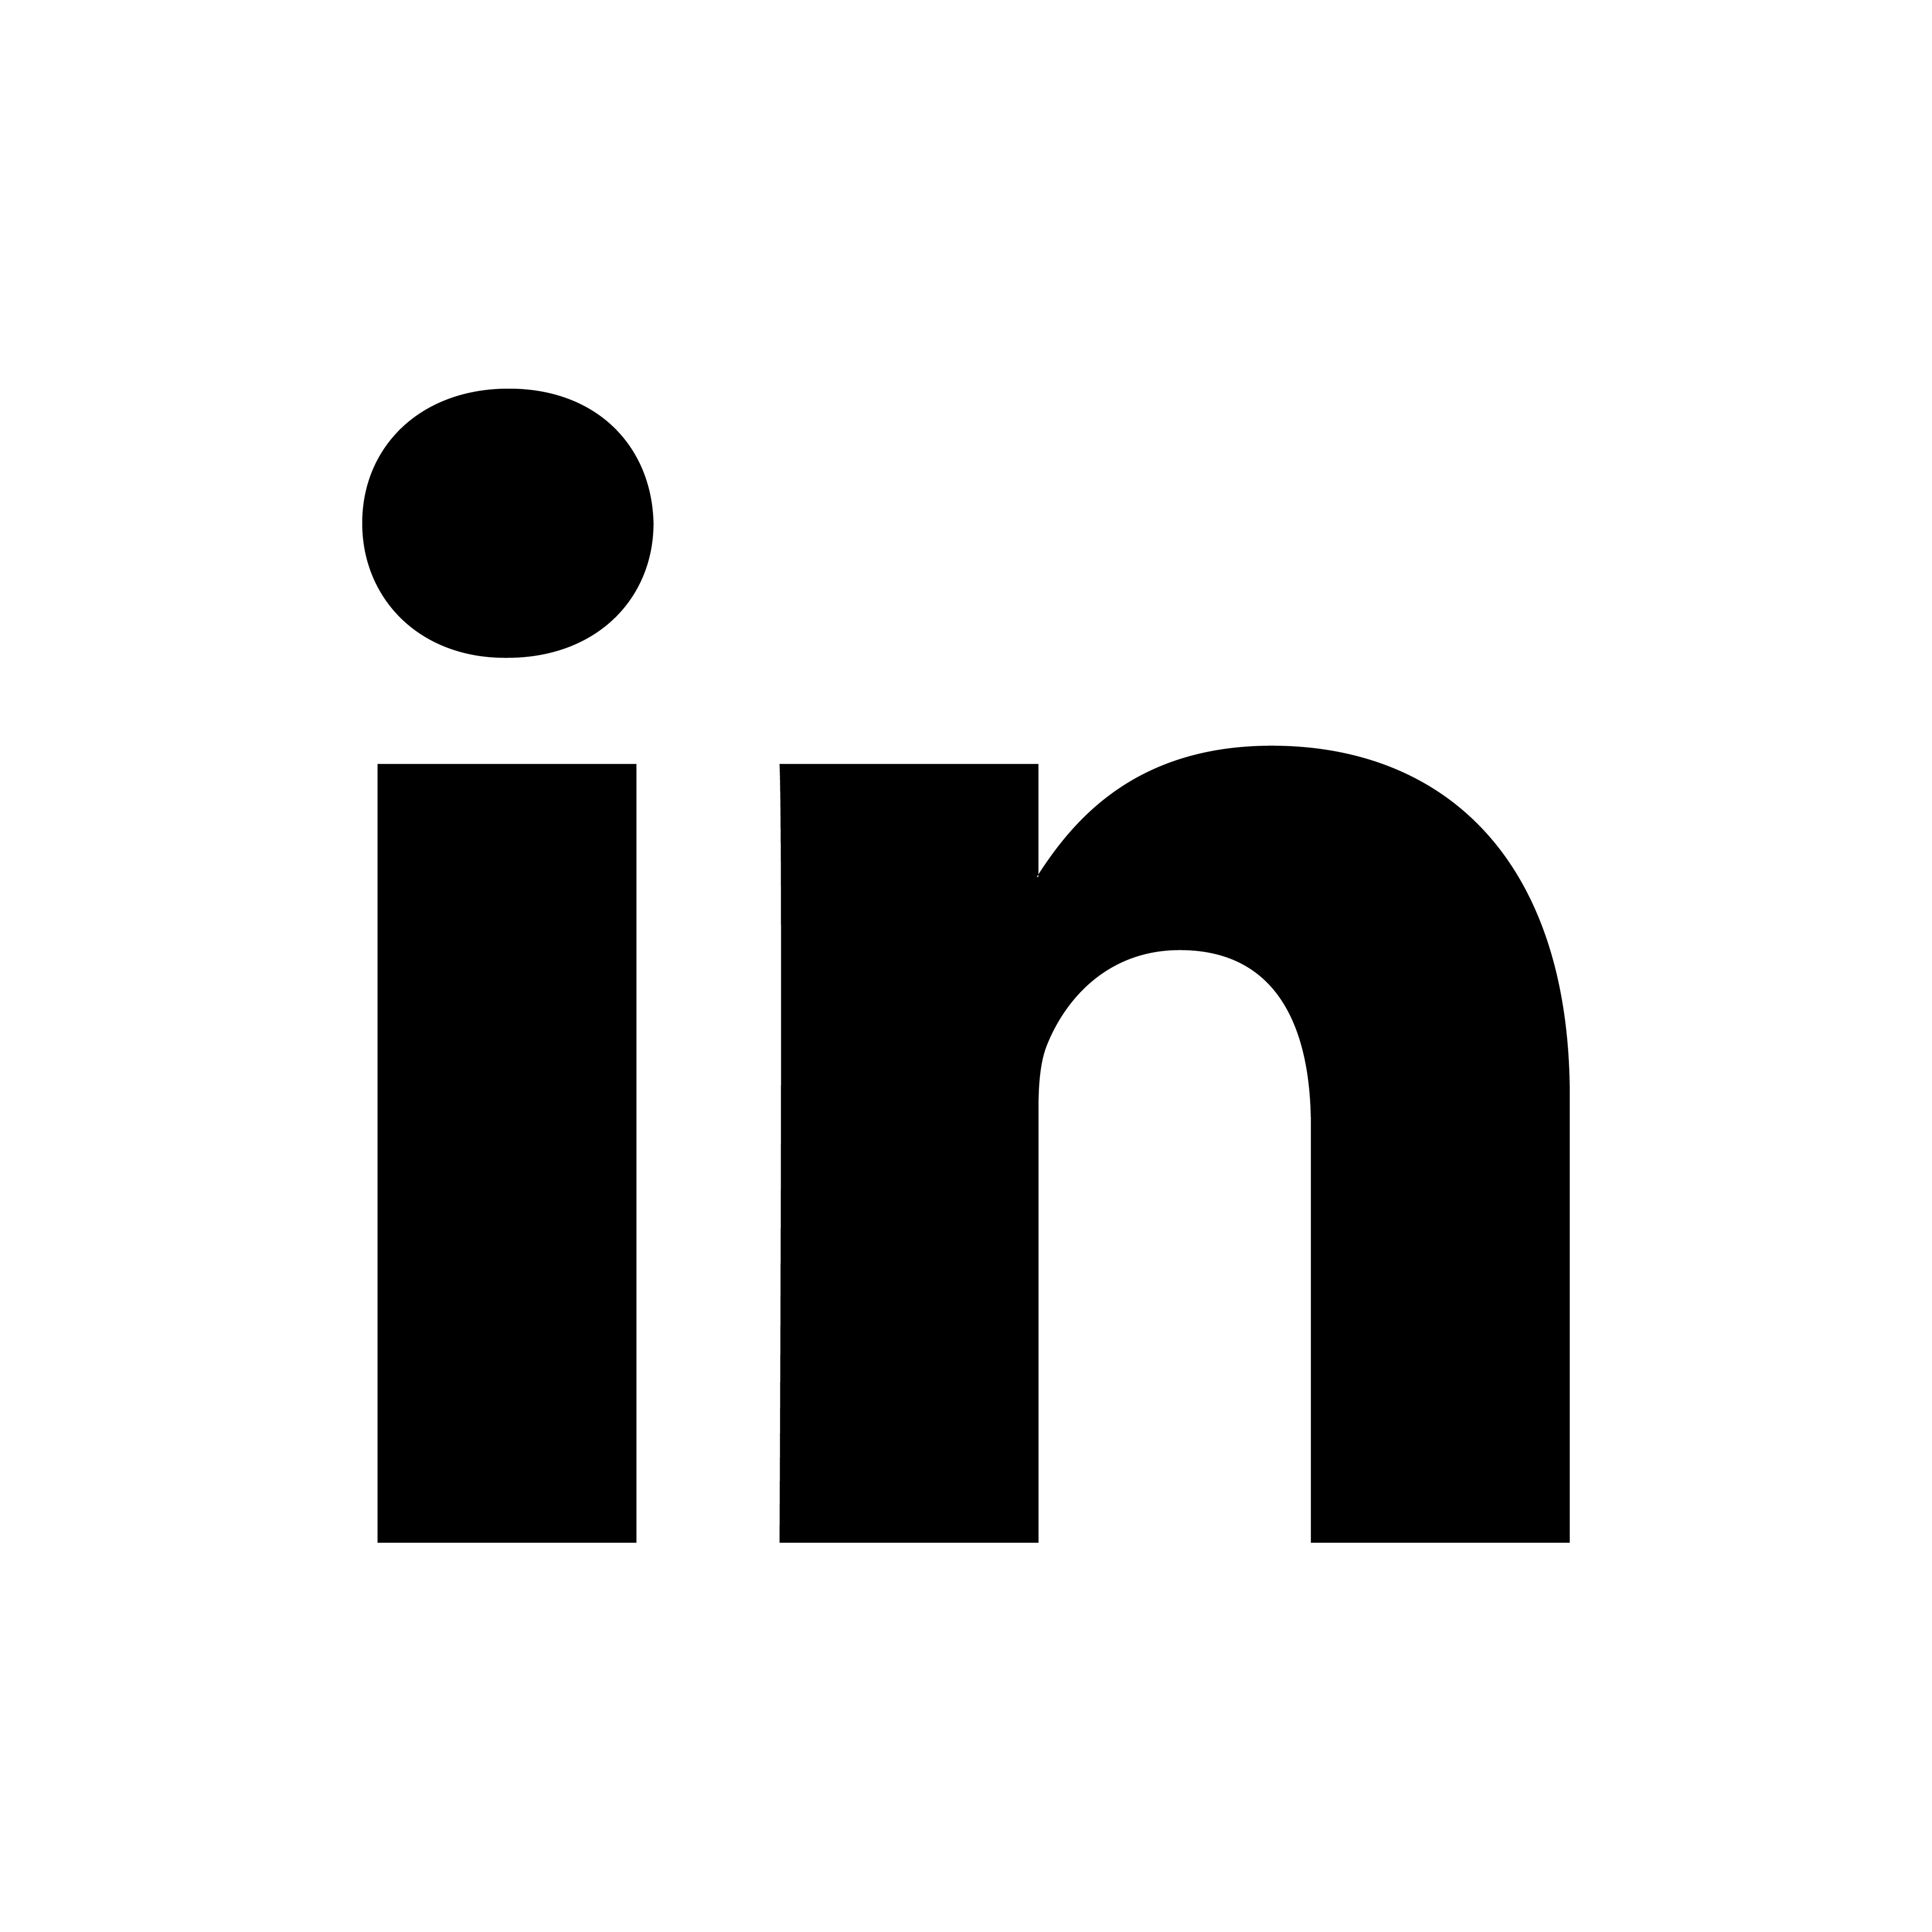 Linkedin logo black png image #1845 - Free Transparent PNG Logos